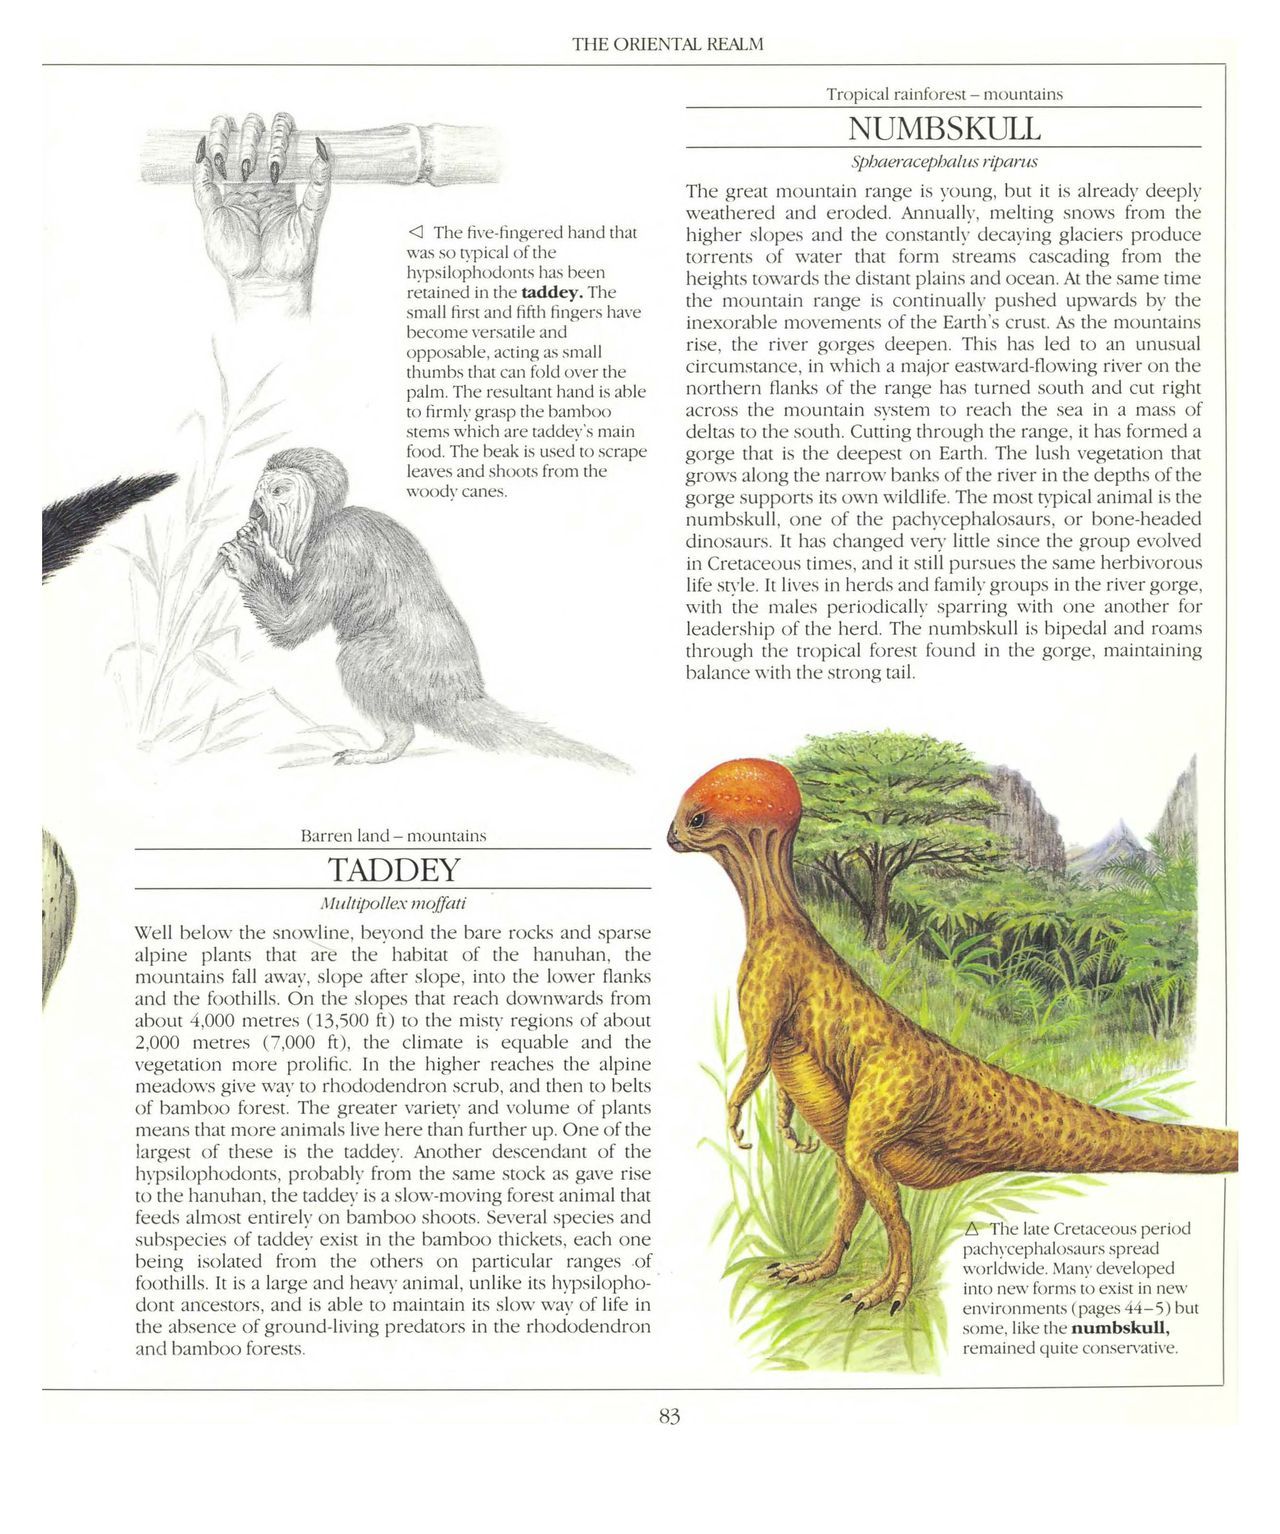 [Dougal Dixon] The New Dinosaurs: An Alternative Evolution 84